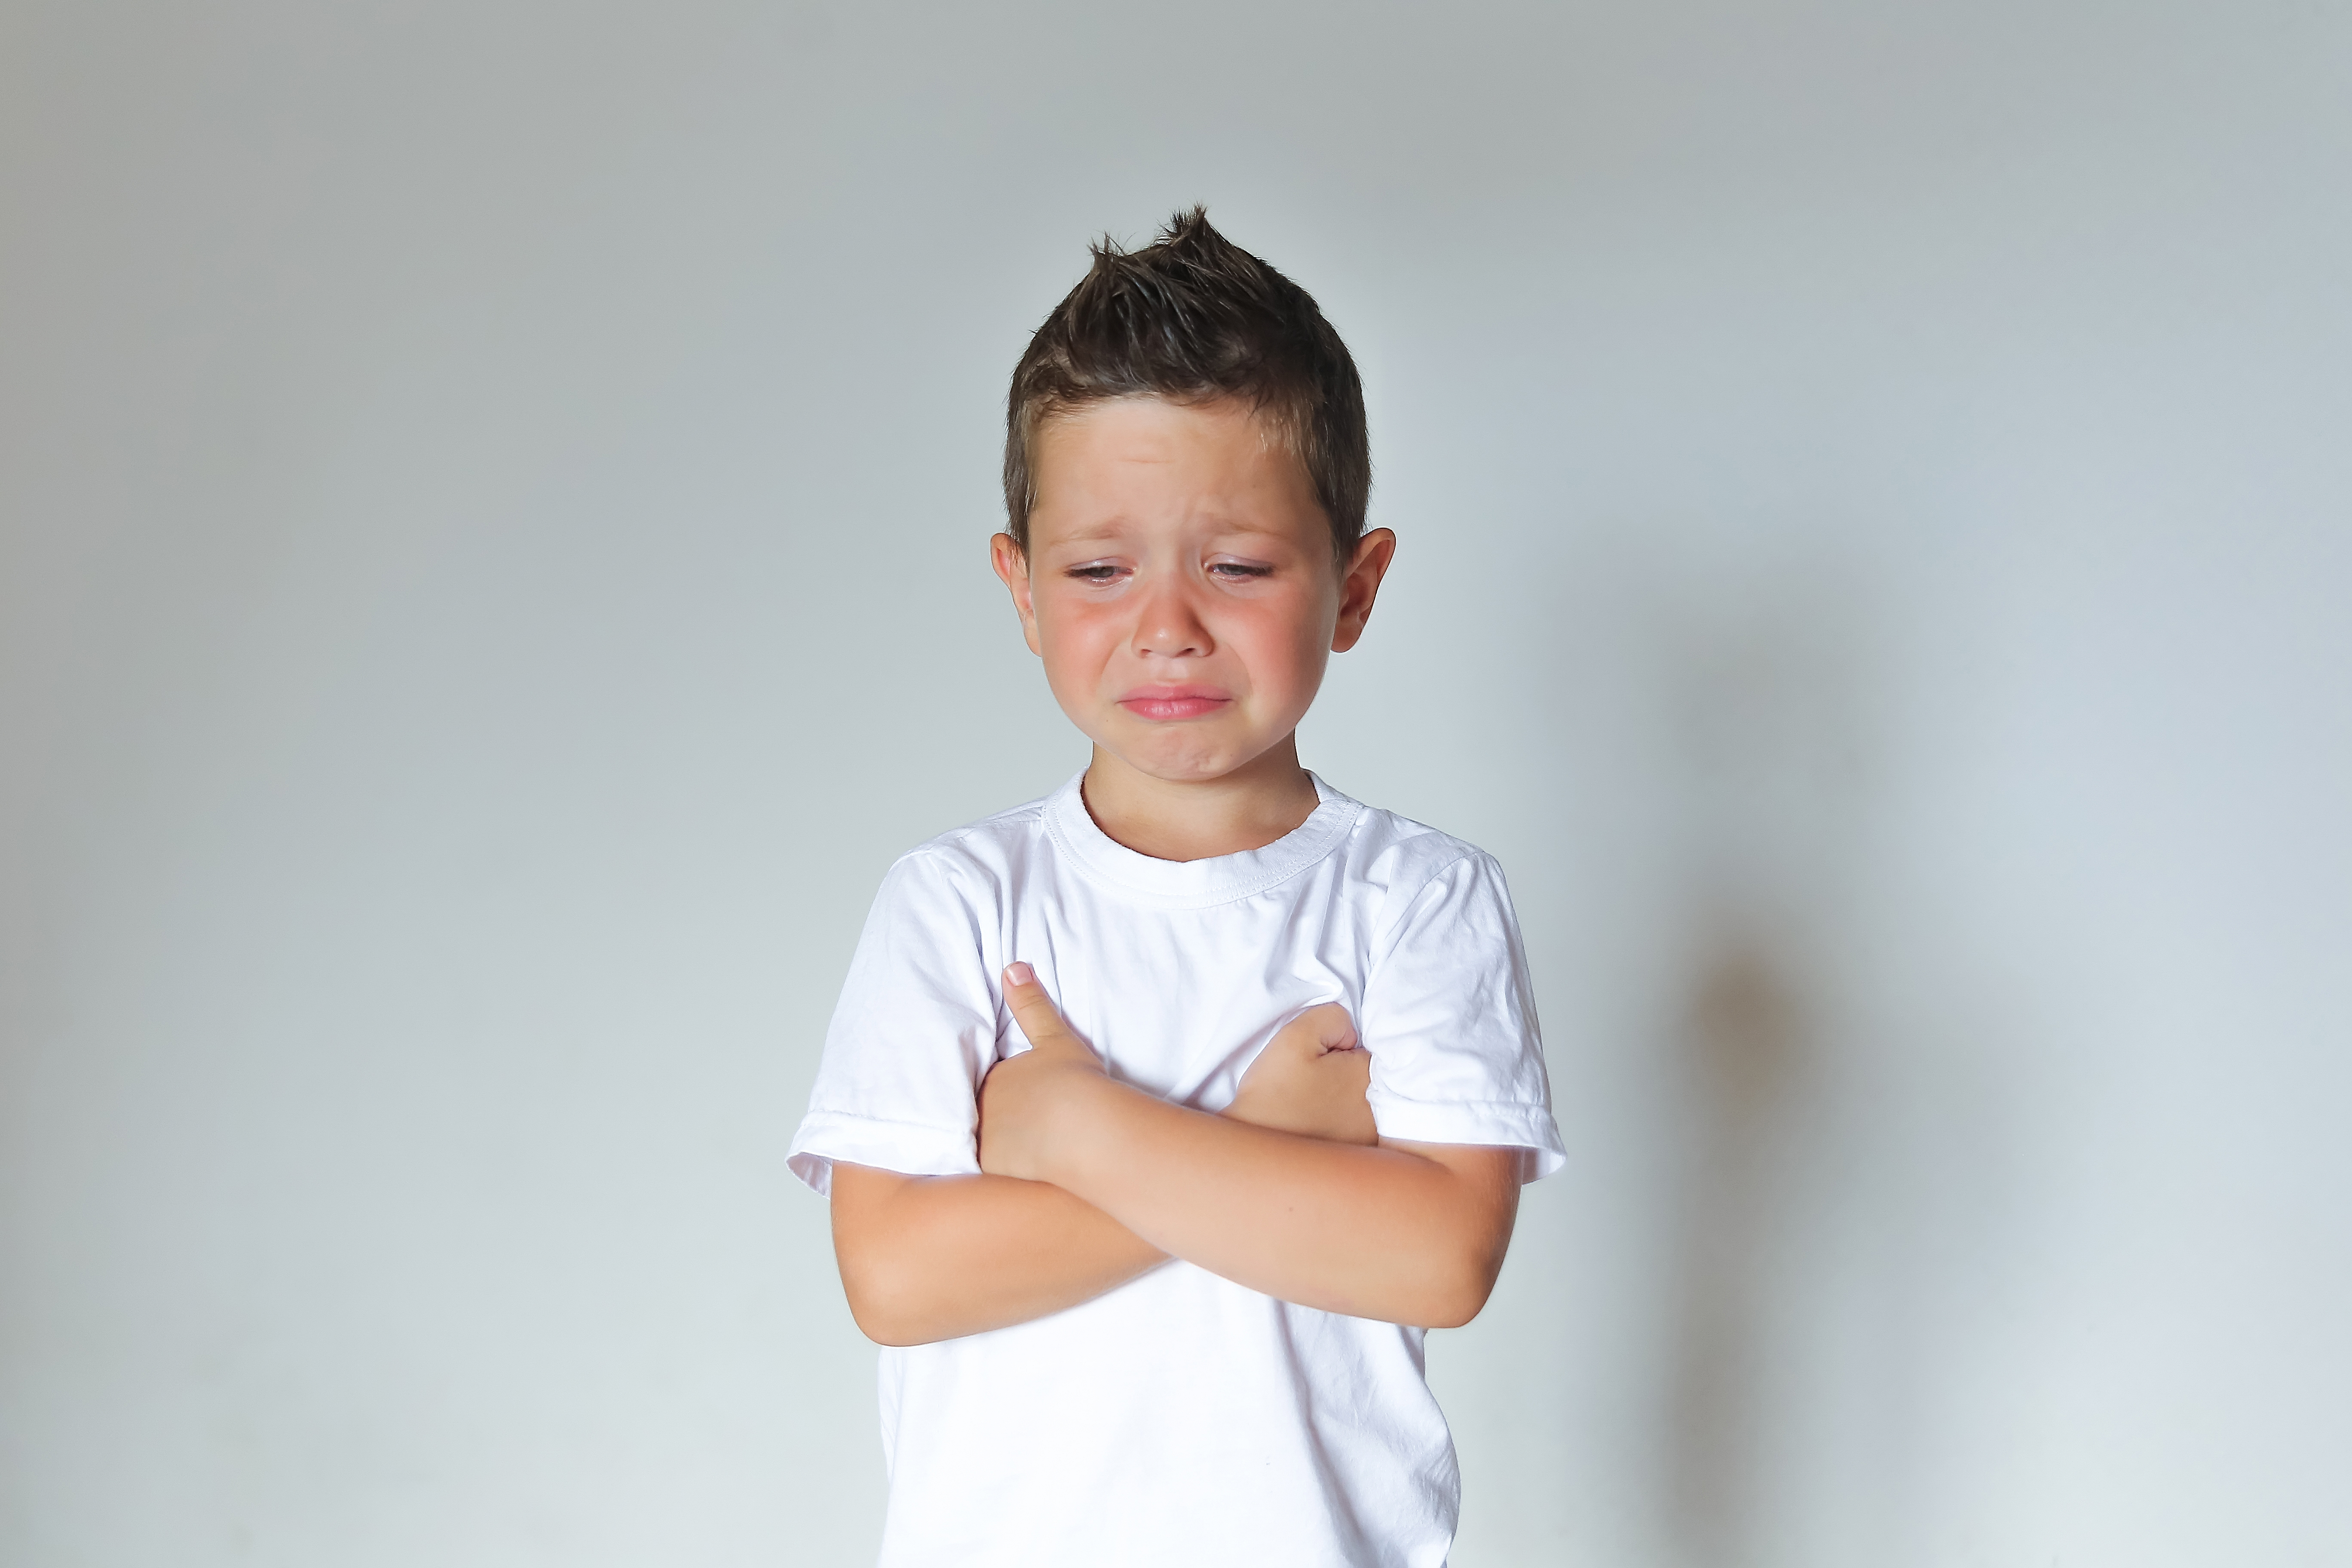 Sad offended little boy | Source: Shutterstock